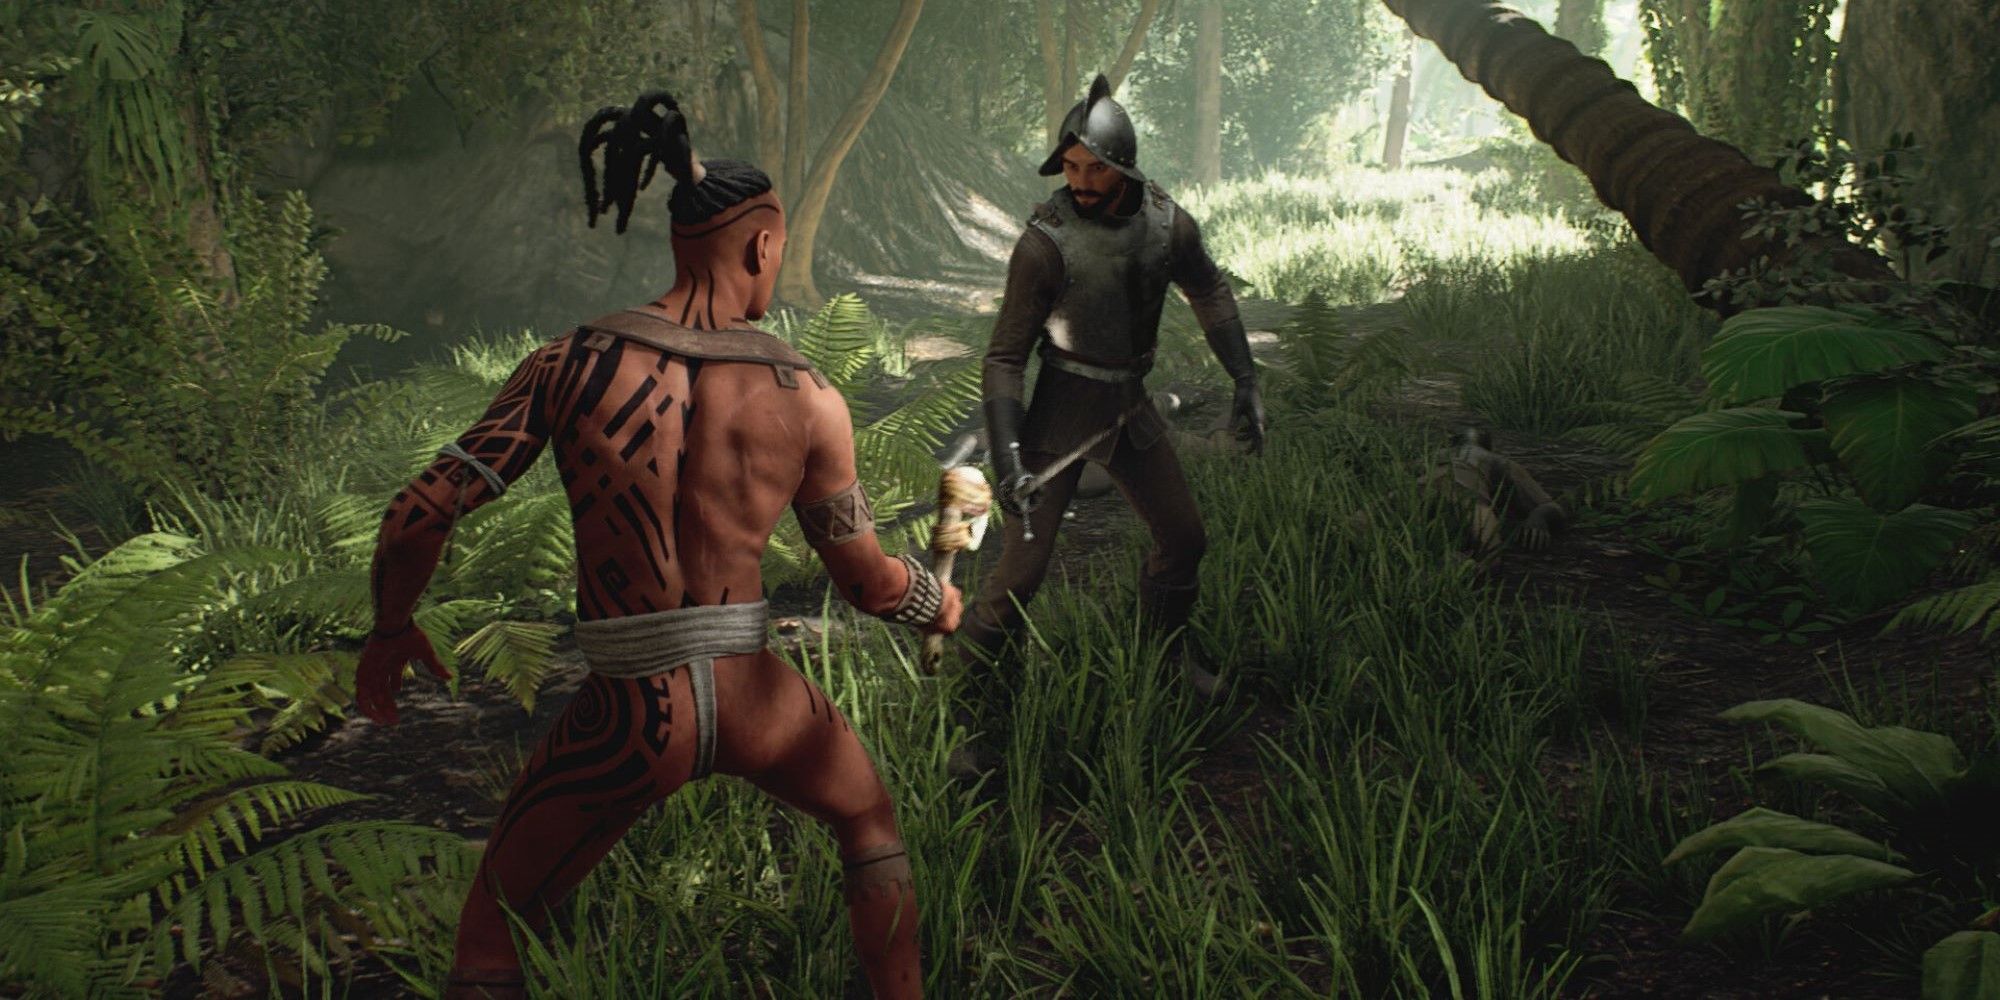 Ecumene Aztec protagonist fighting a conquistador